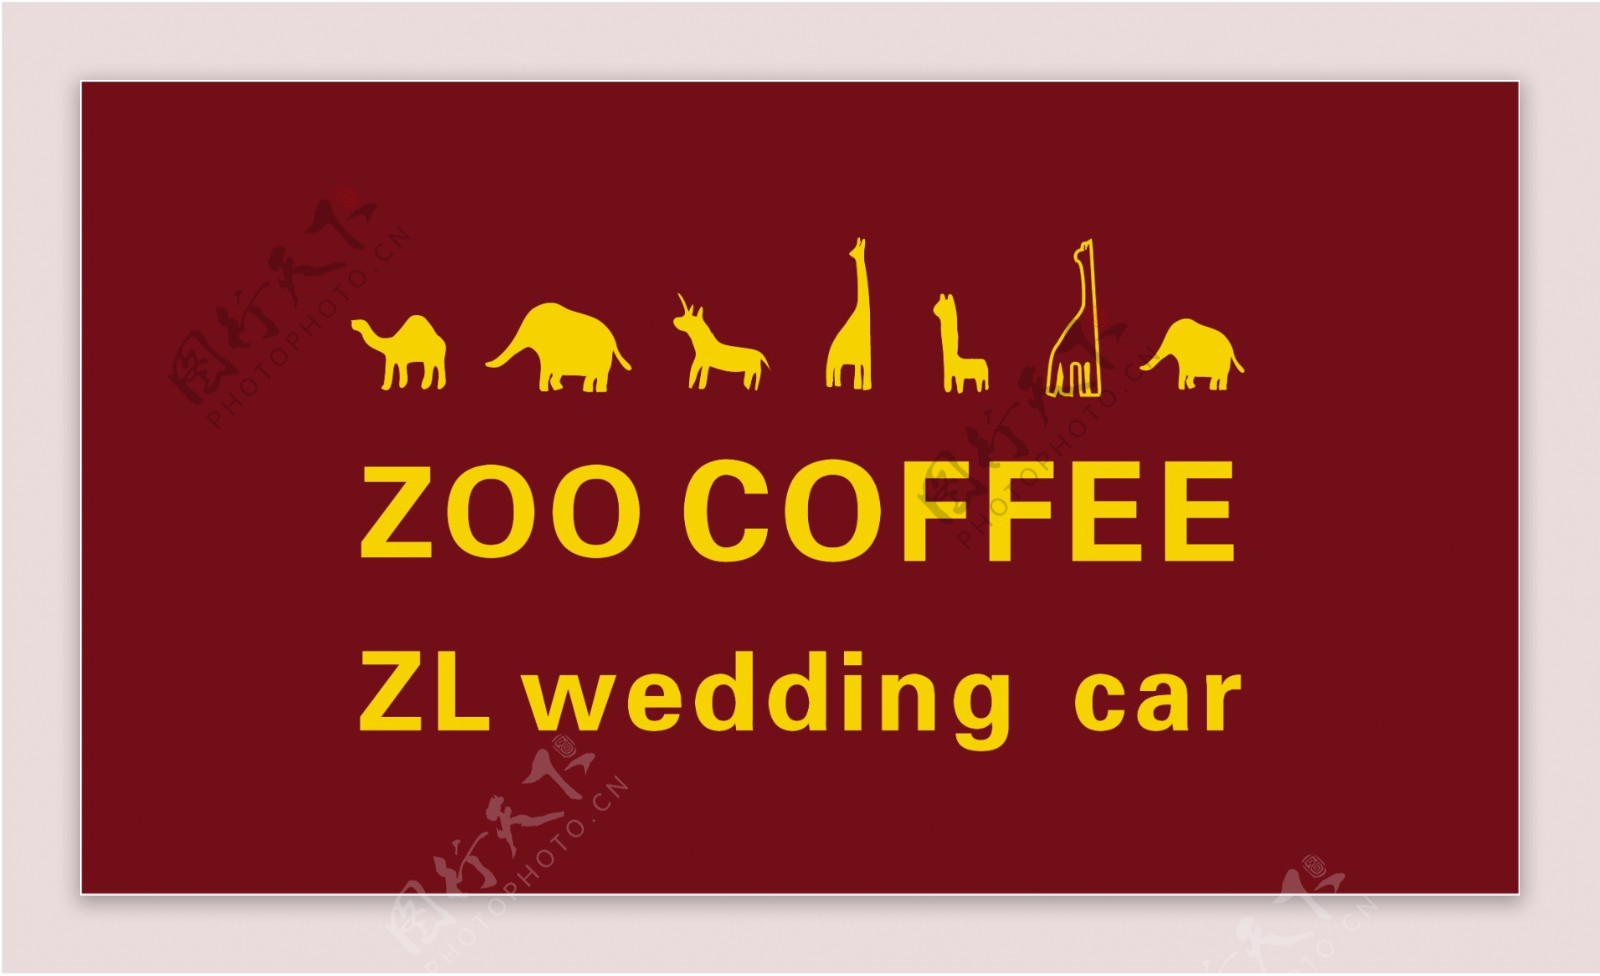 ZOOCOFFEE咖啡标志